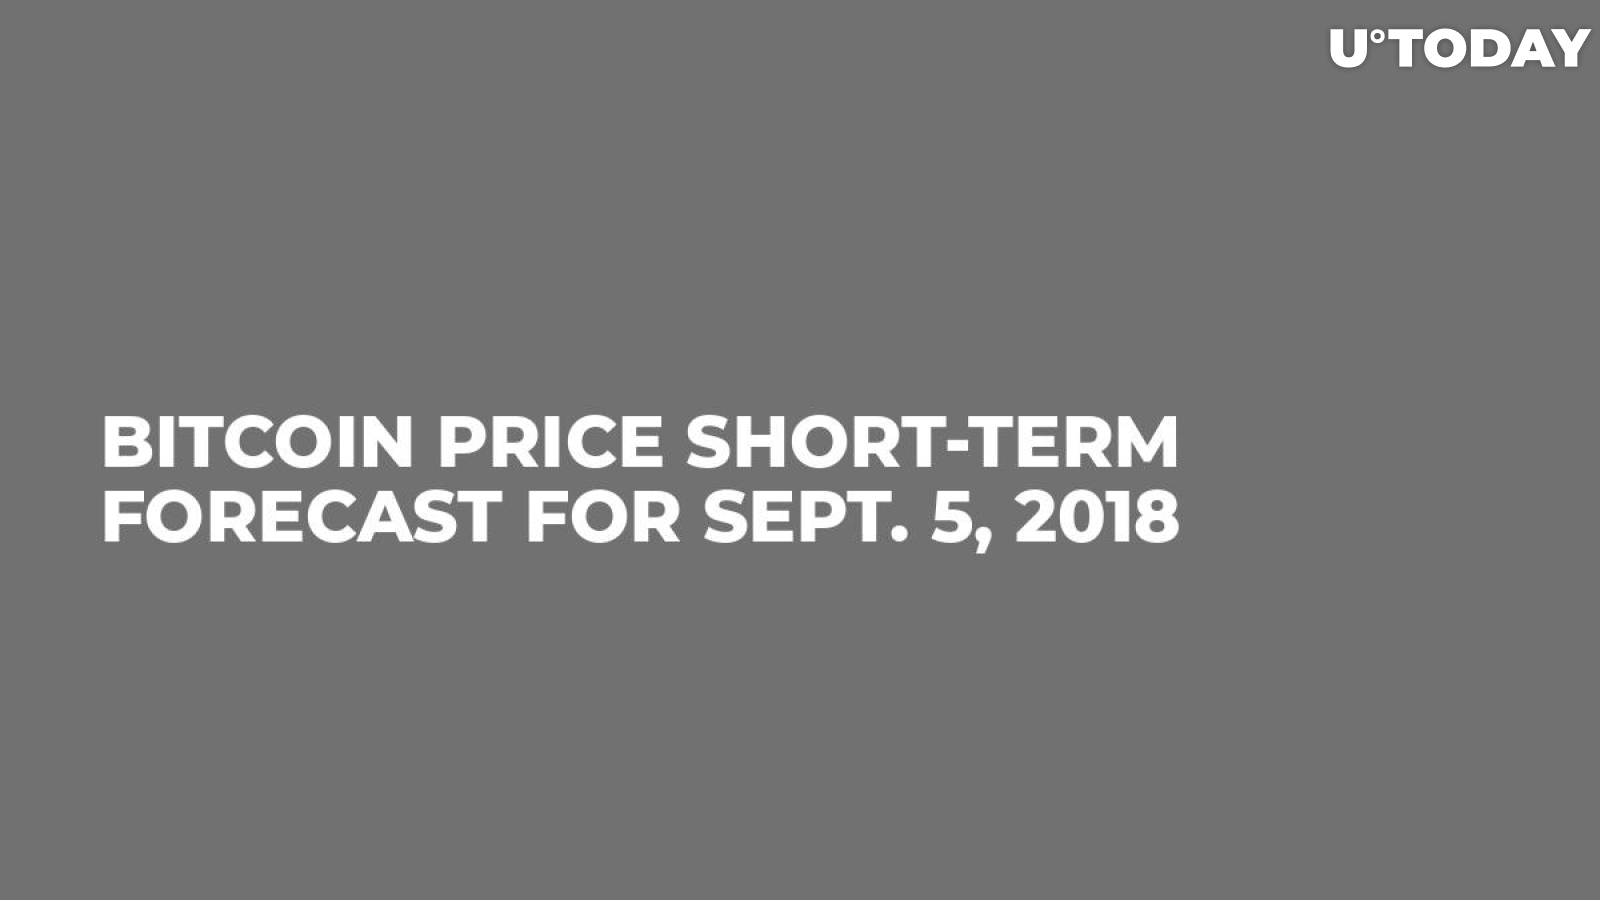 Bitcoin Price Short-Term Forecast For Sept. 5, 2018